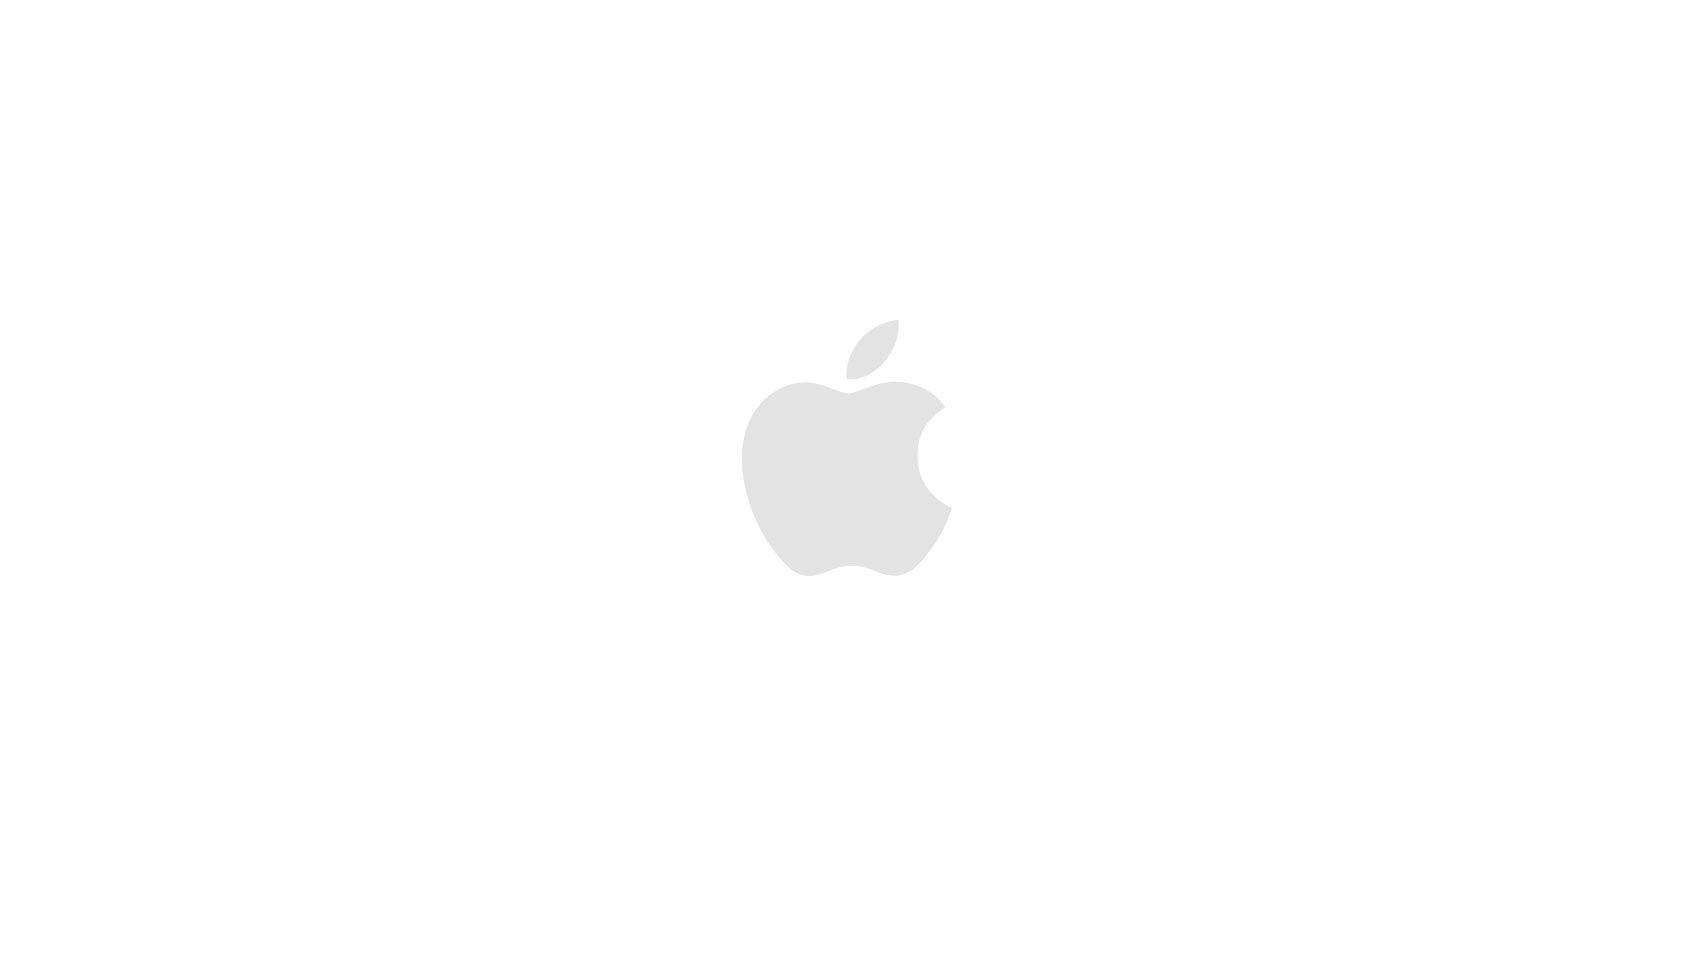 2018 Apple Company Logo - iPhone XS - Apple